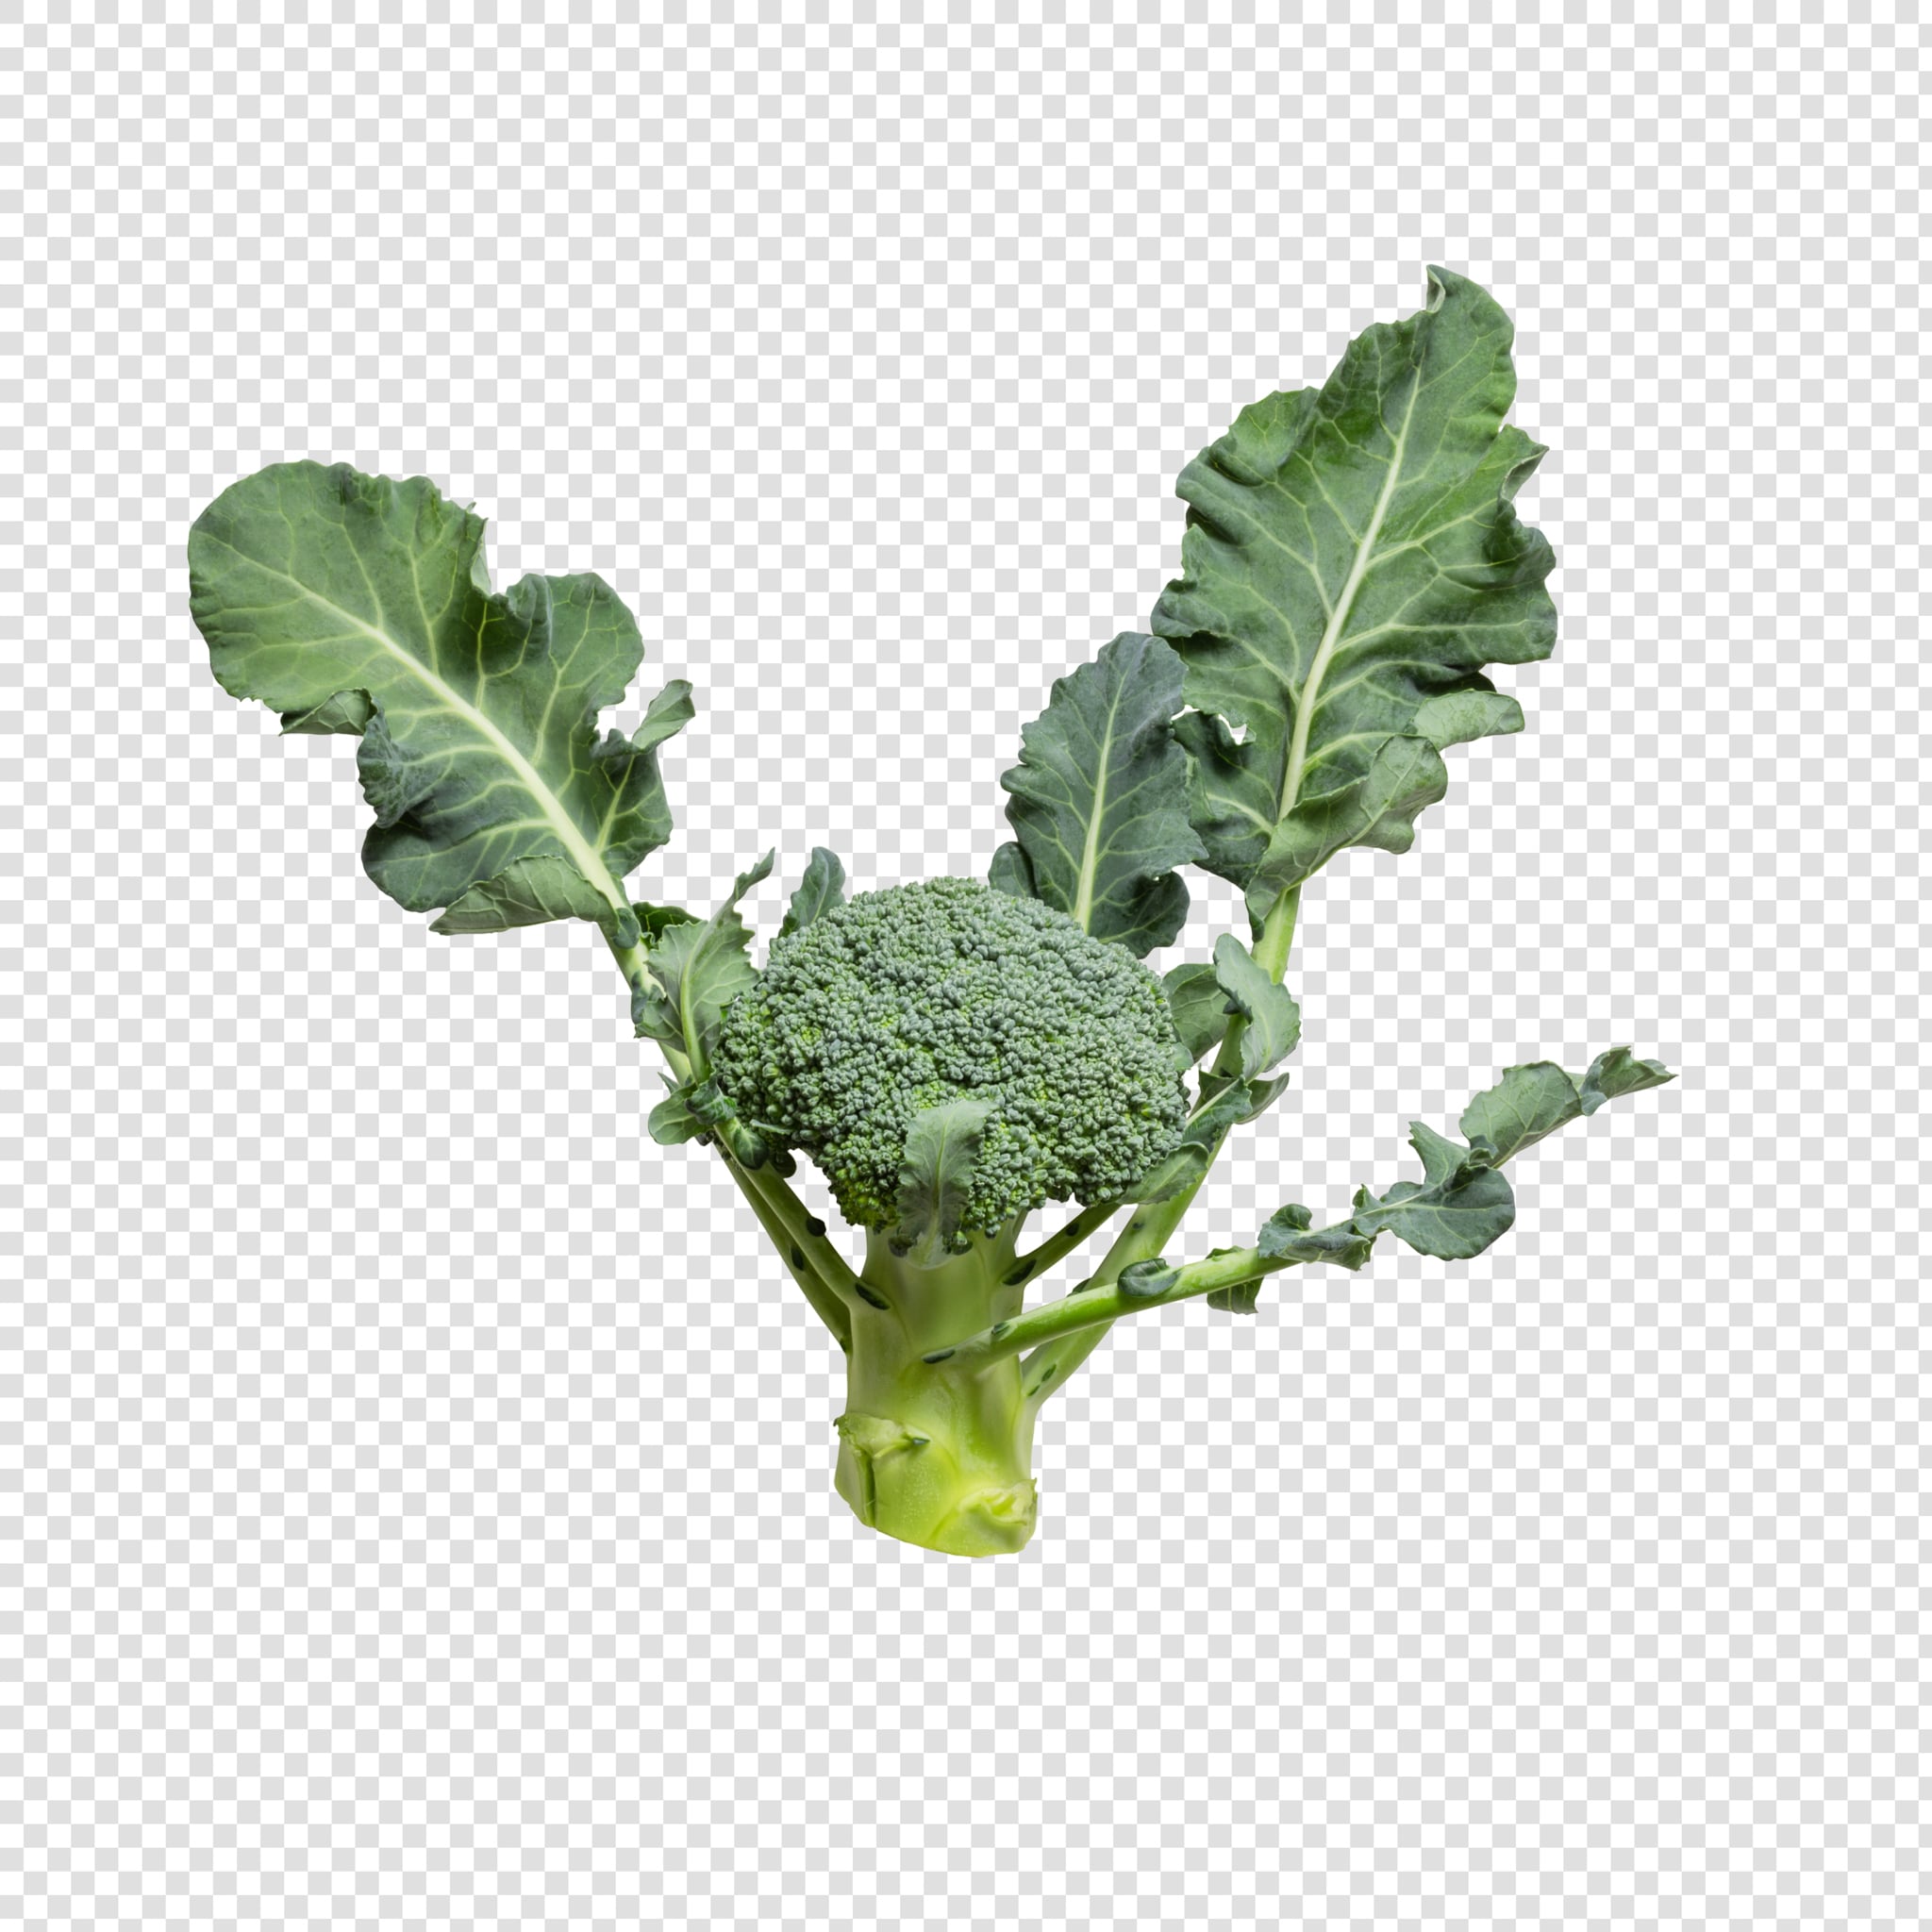 Isolated Broccoli psd image